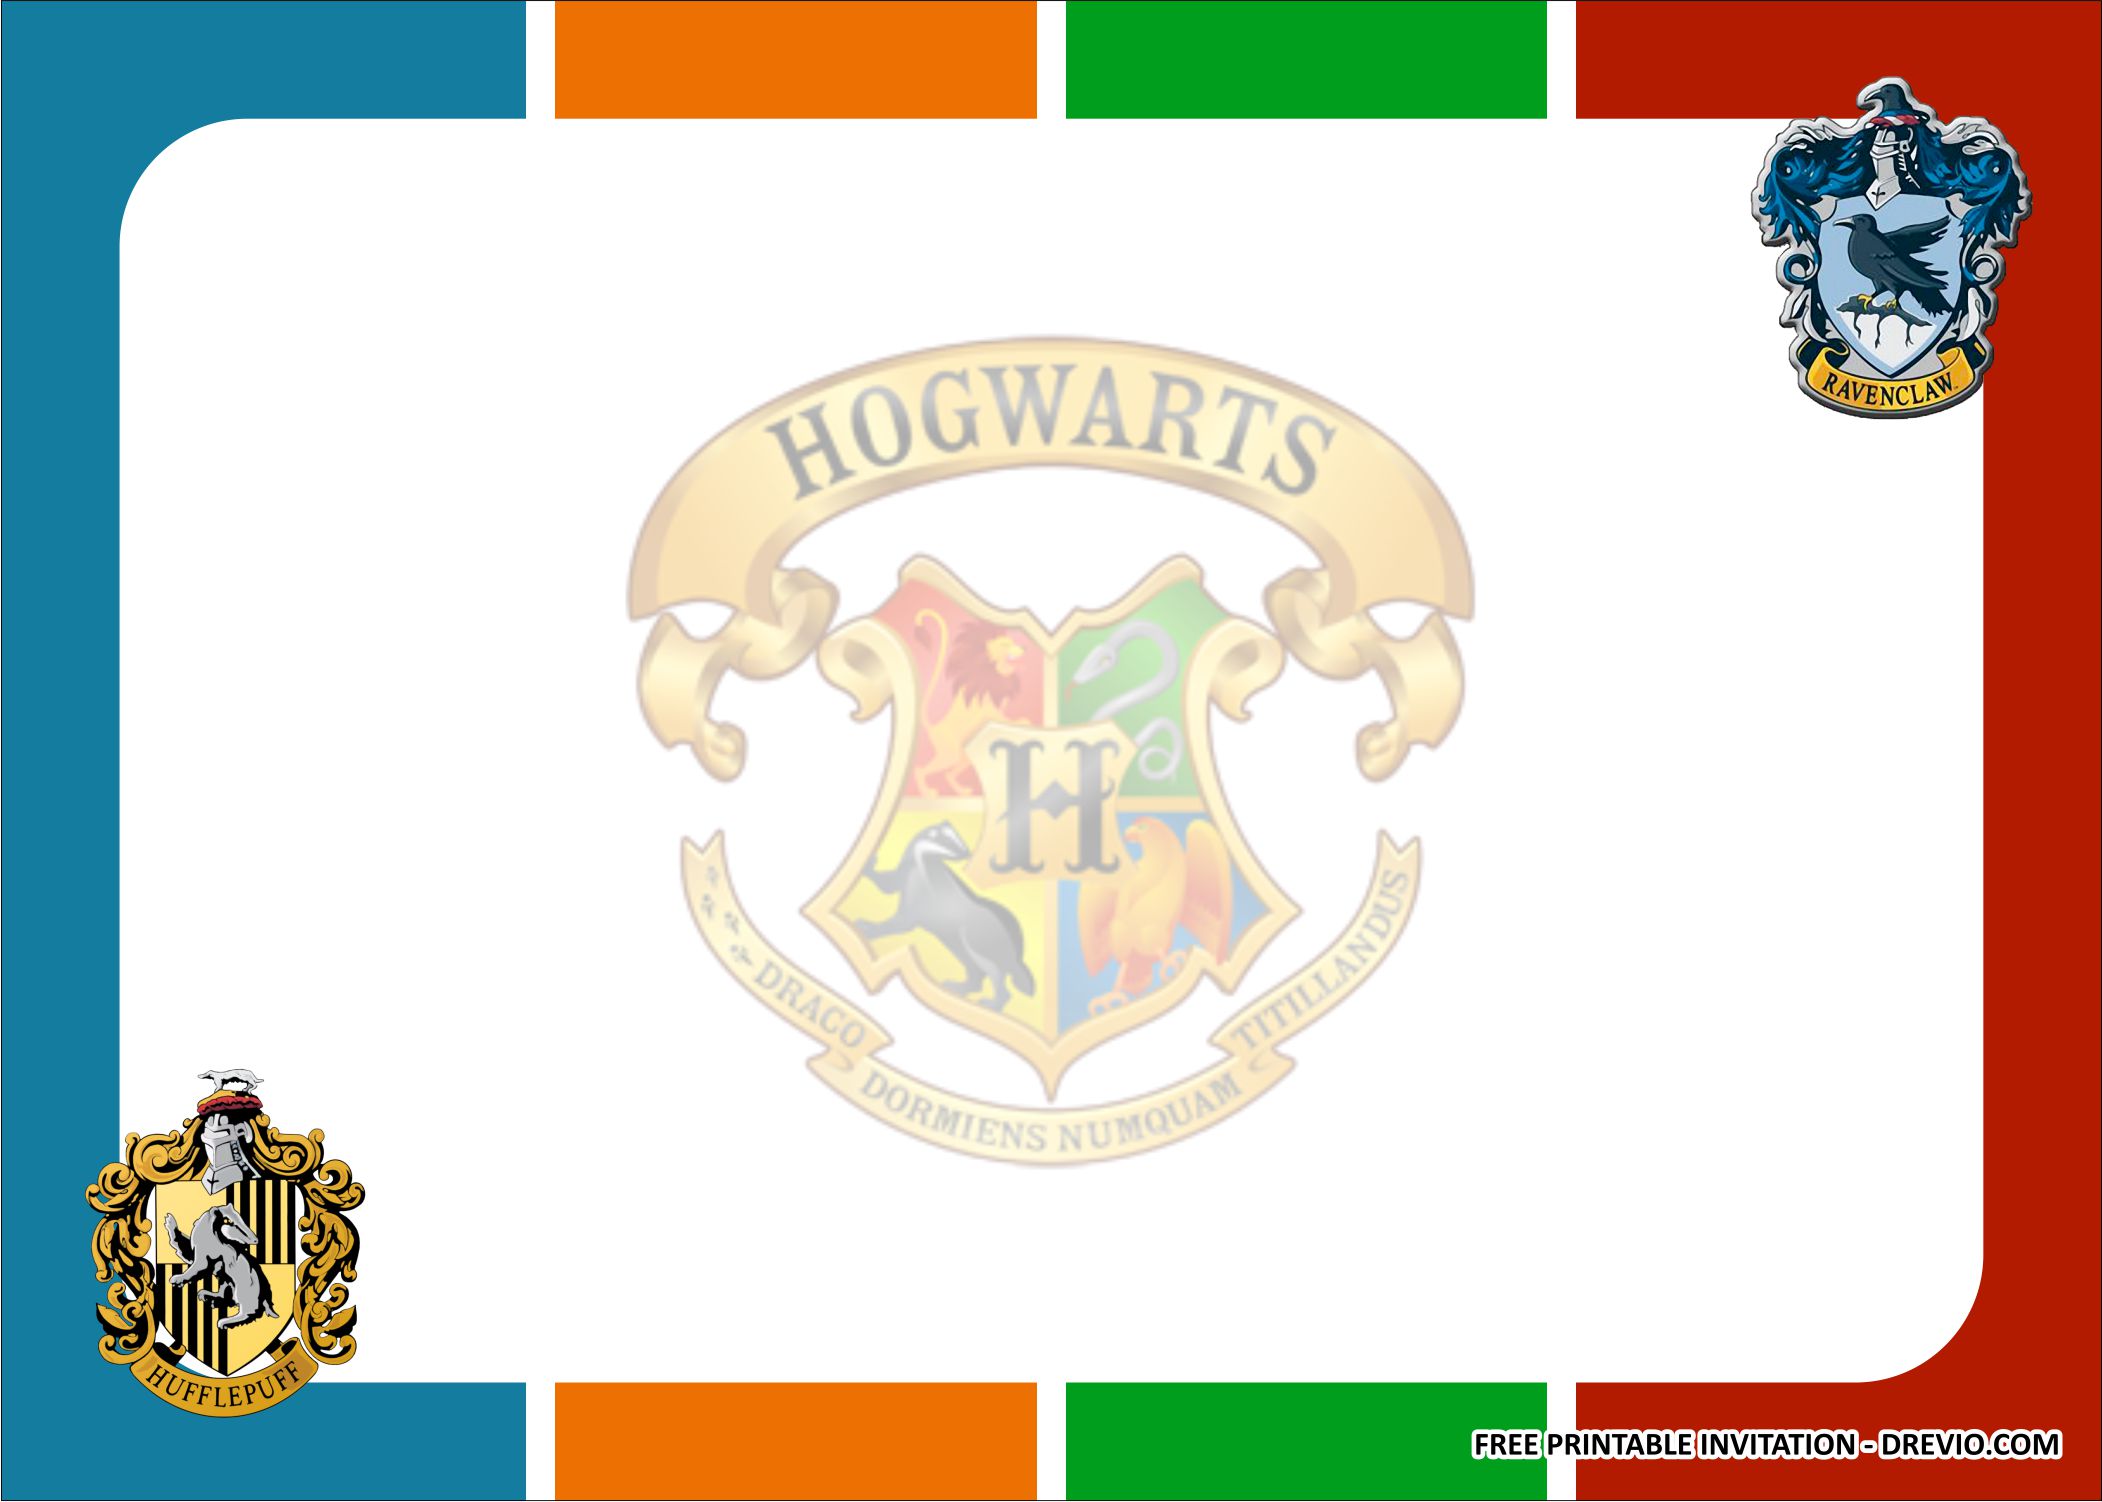 Free Printable Hogwarts' Houses DIY Award Ribbons - Harry Potter Party